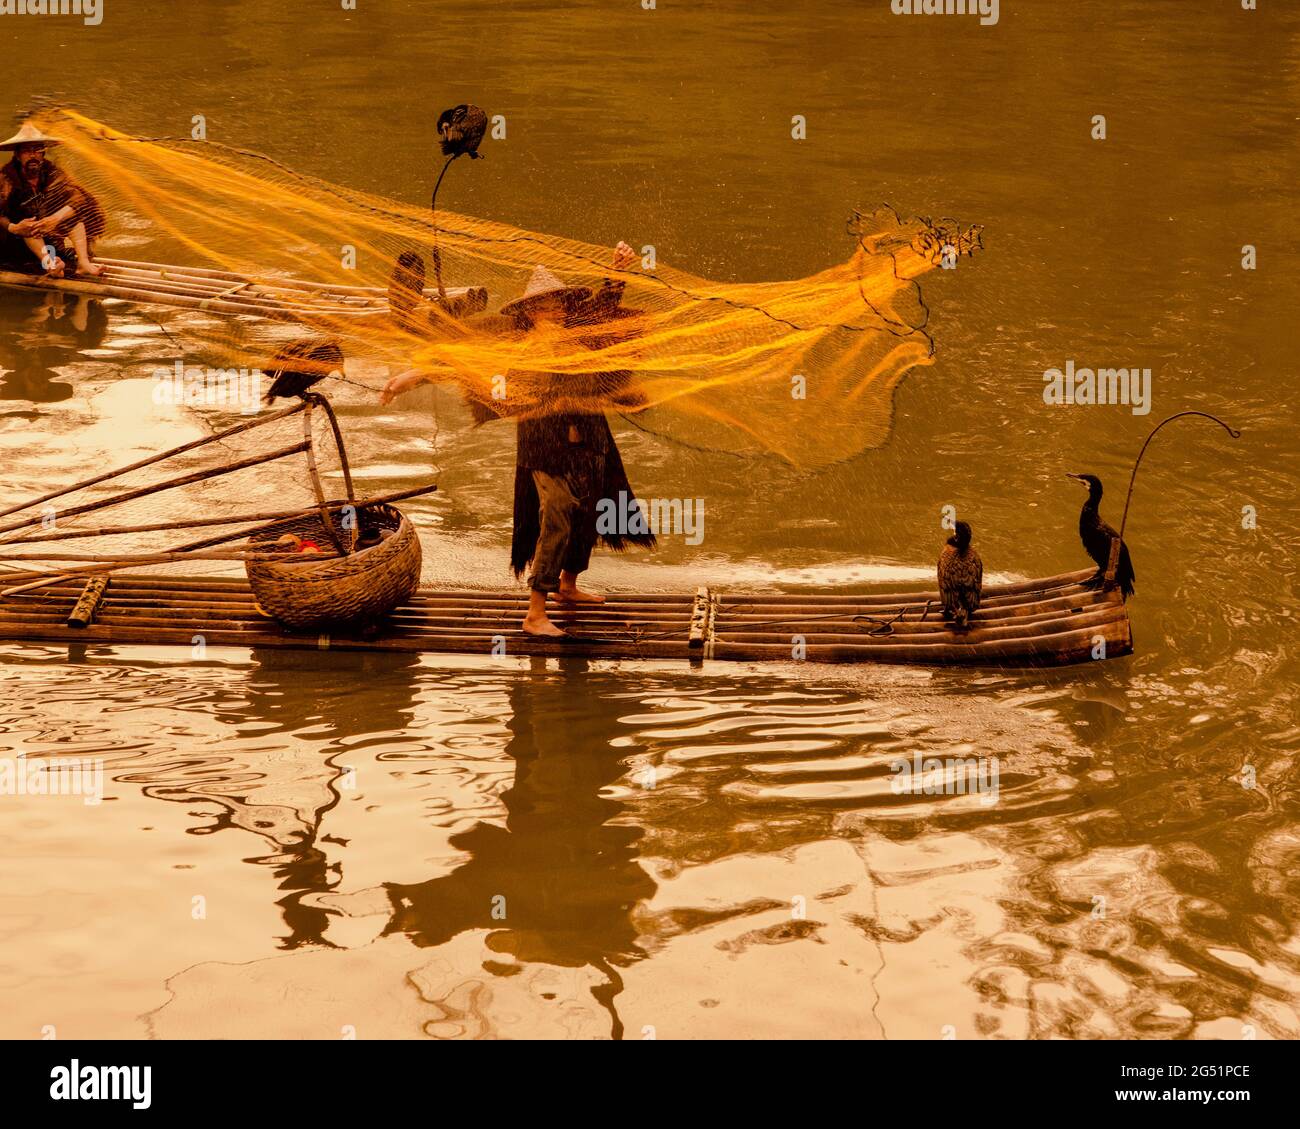 Red de pesca cormorán al atardecer, Río Li, Xingping, provincia de Shaanxi, China Foto de stock